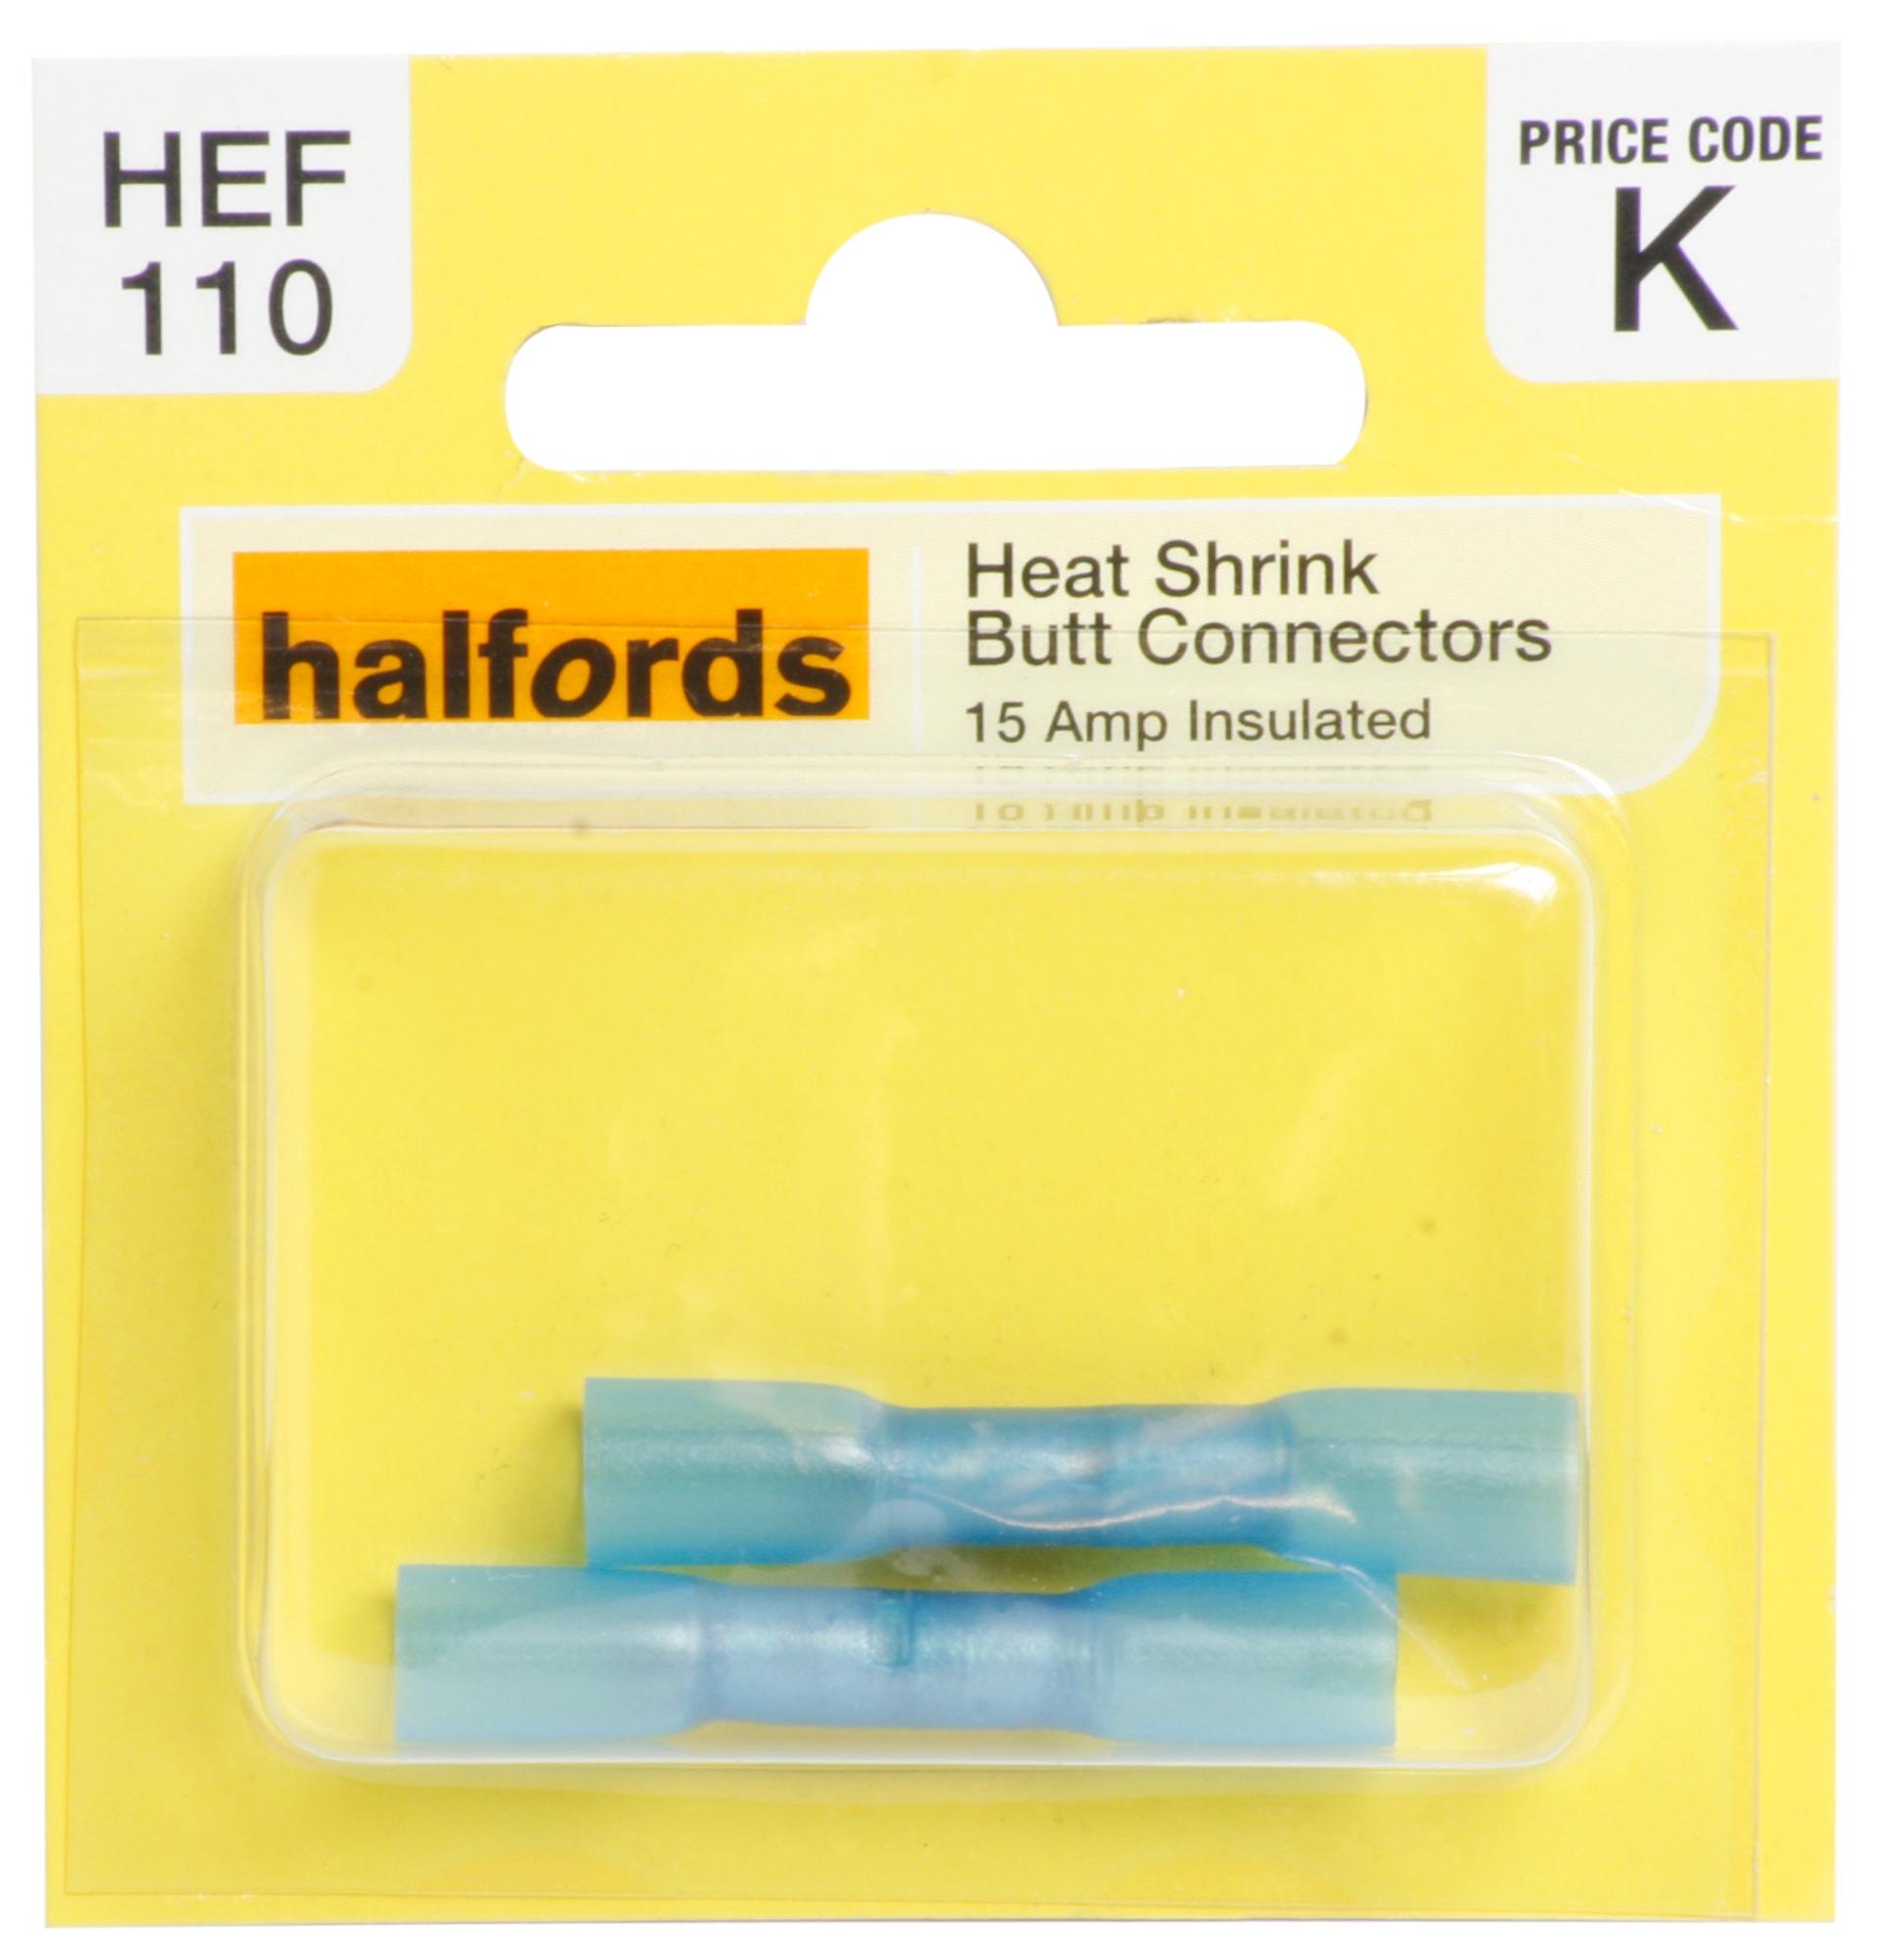 Halfords Heat Shrink Butt Connectors (Hef110) 15 Amp